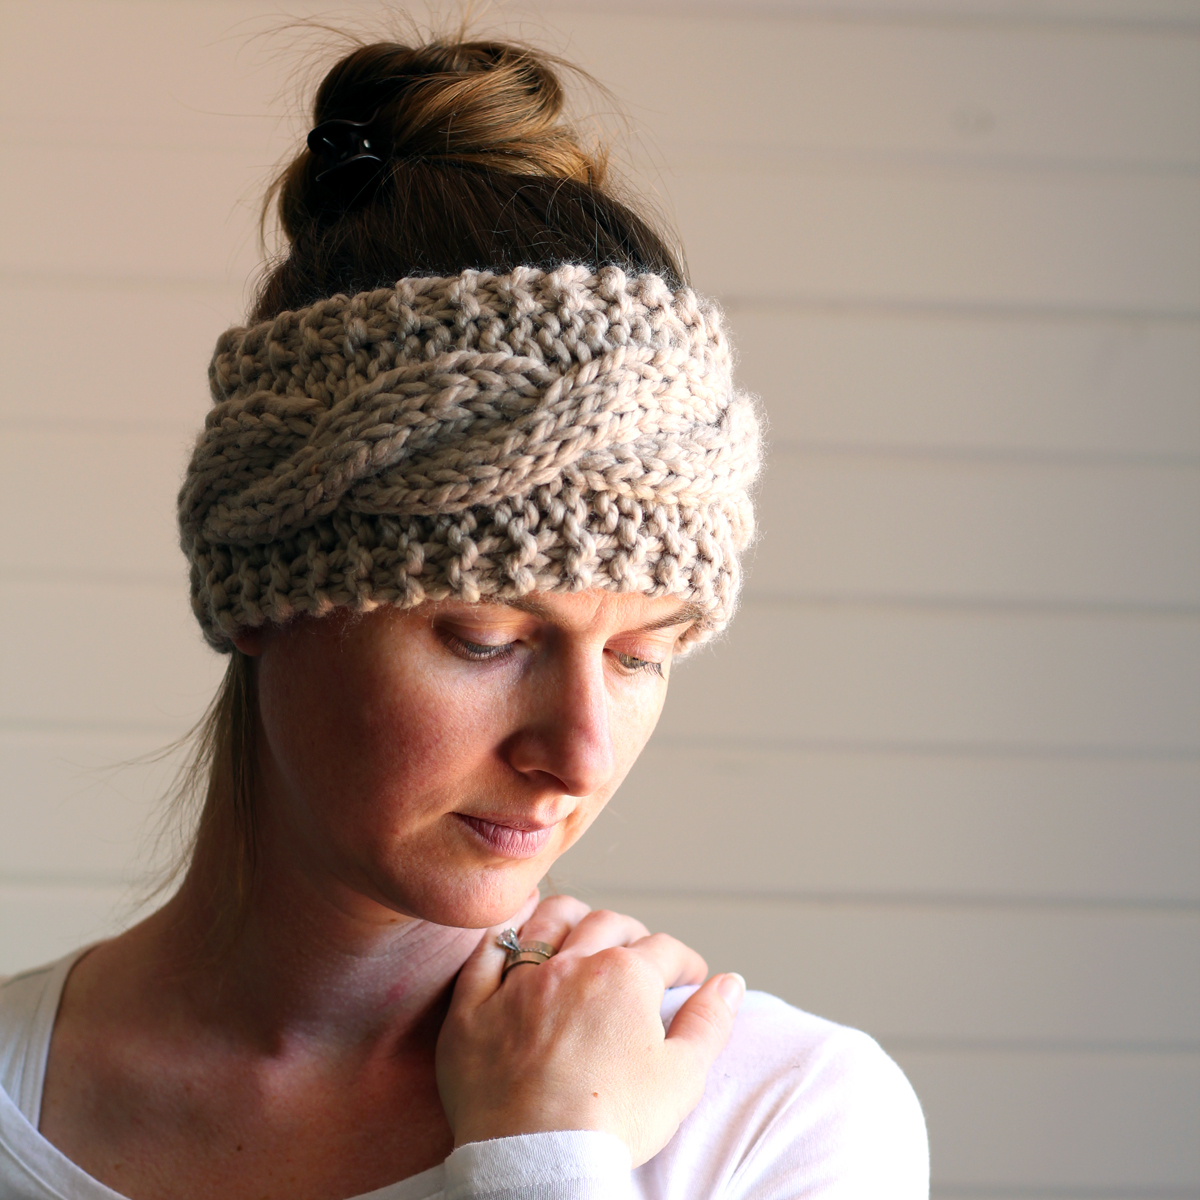 Knitted Headband With Flower Pattern Friendship Headband Knitting Pattern